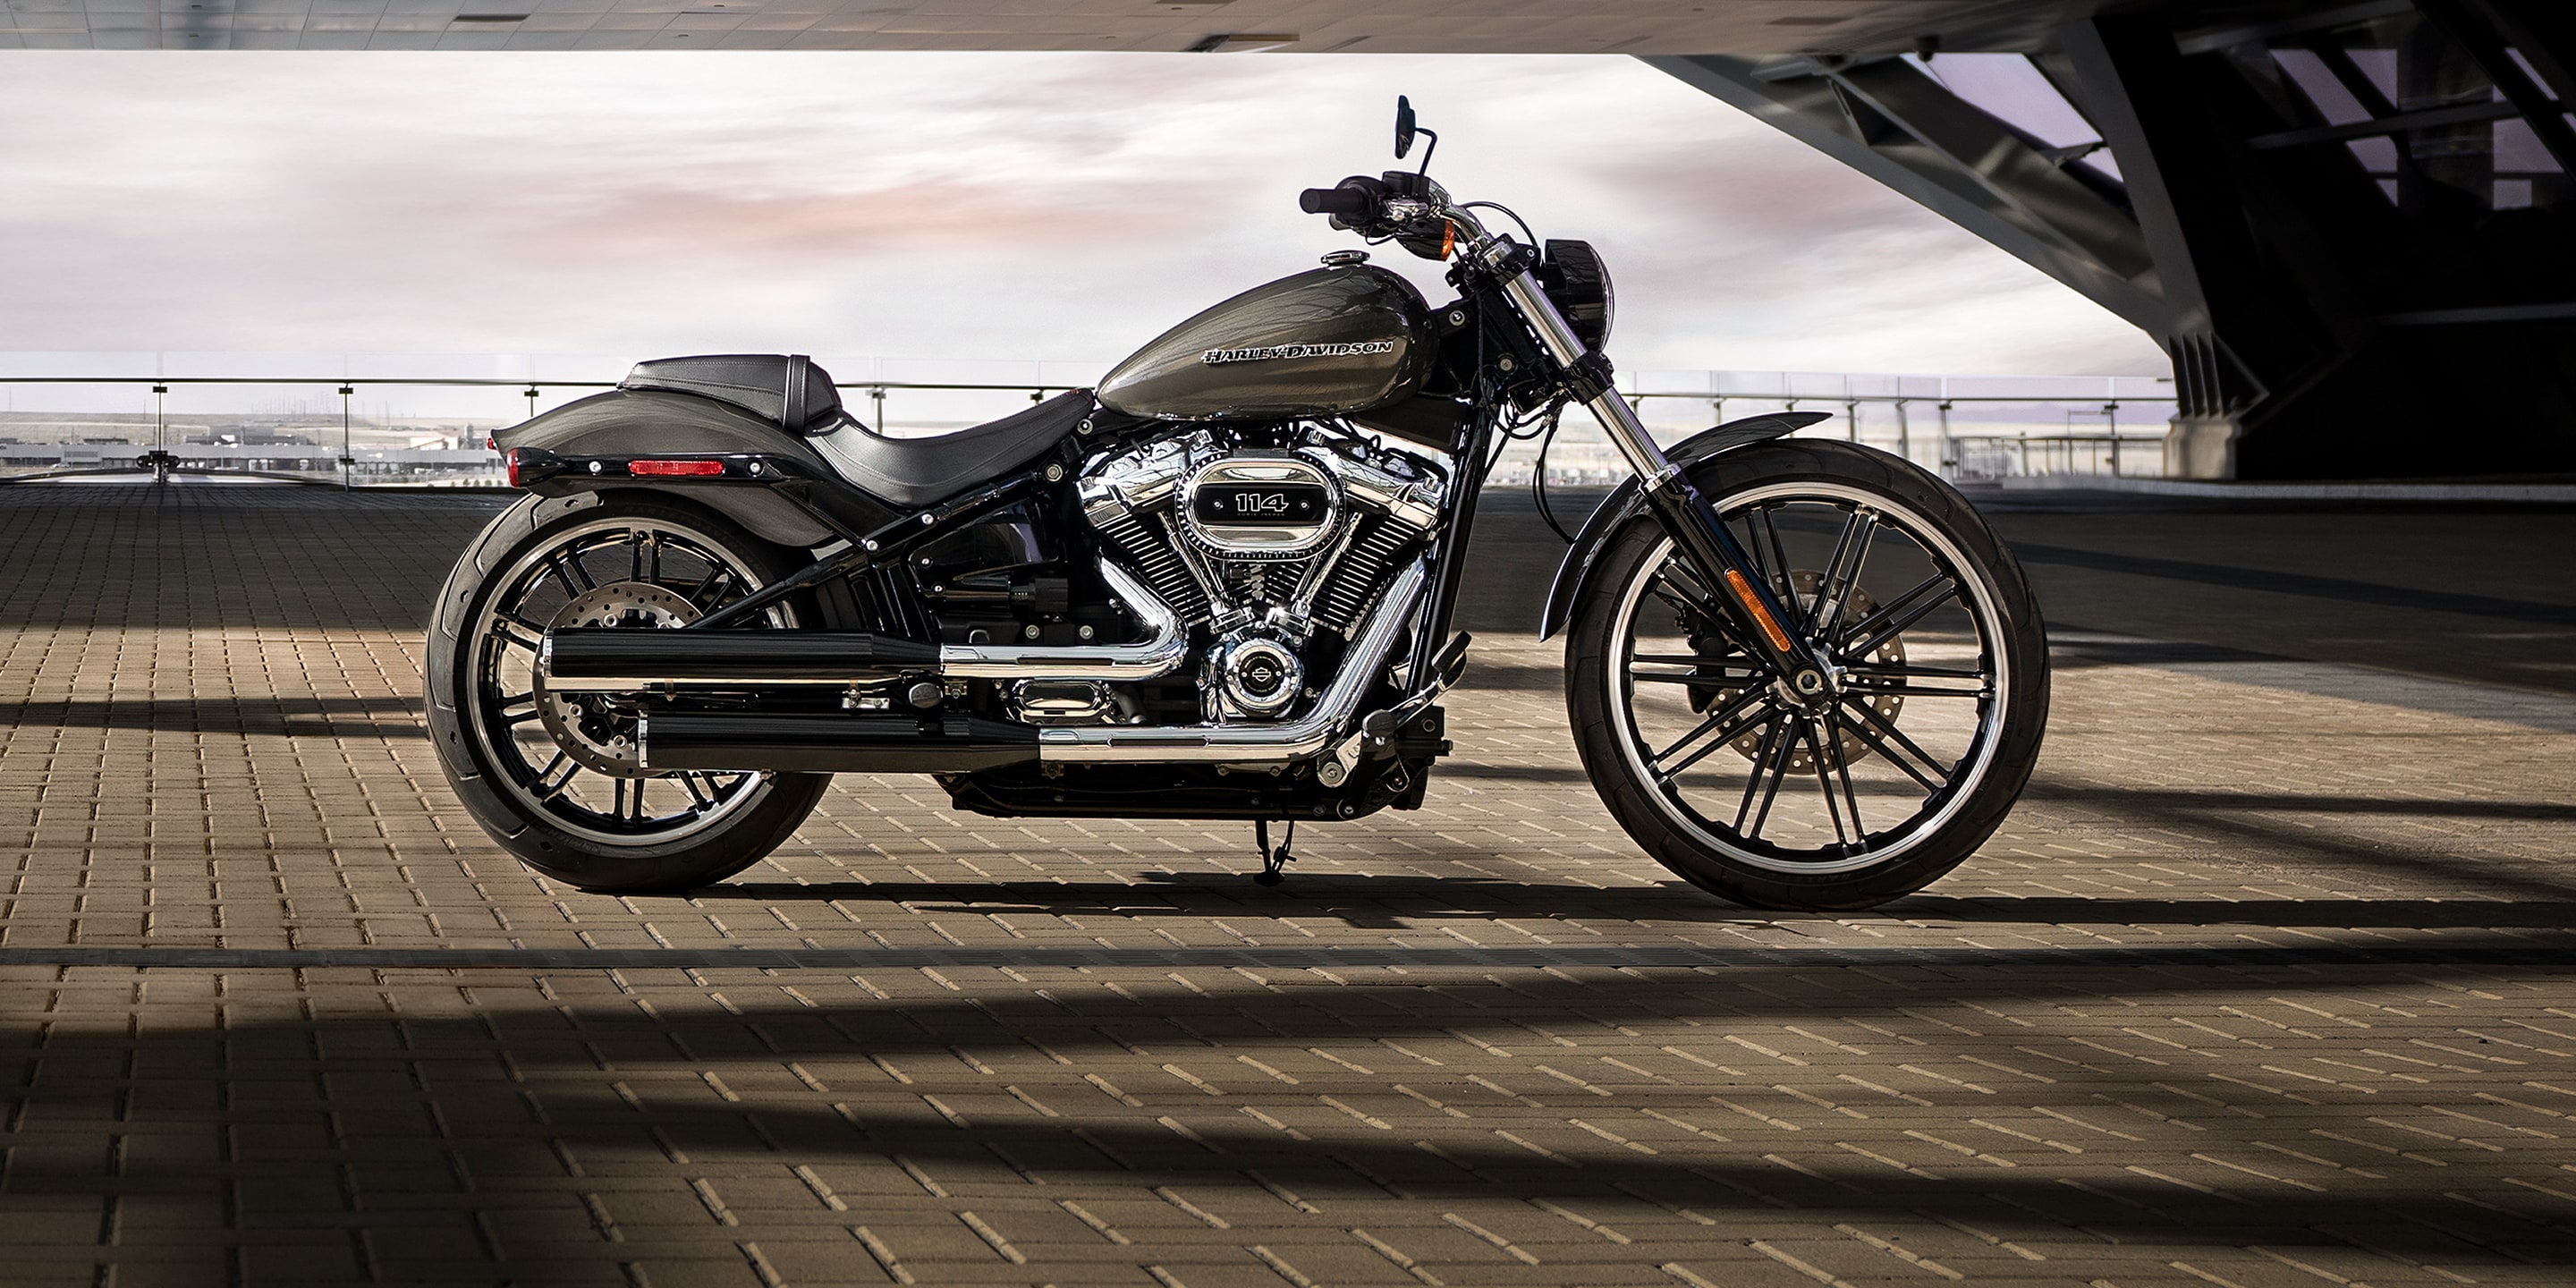  2019  Harley  Davidson  Breakout HD Bikes 4k Wallpapers  